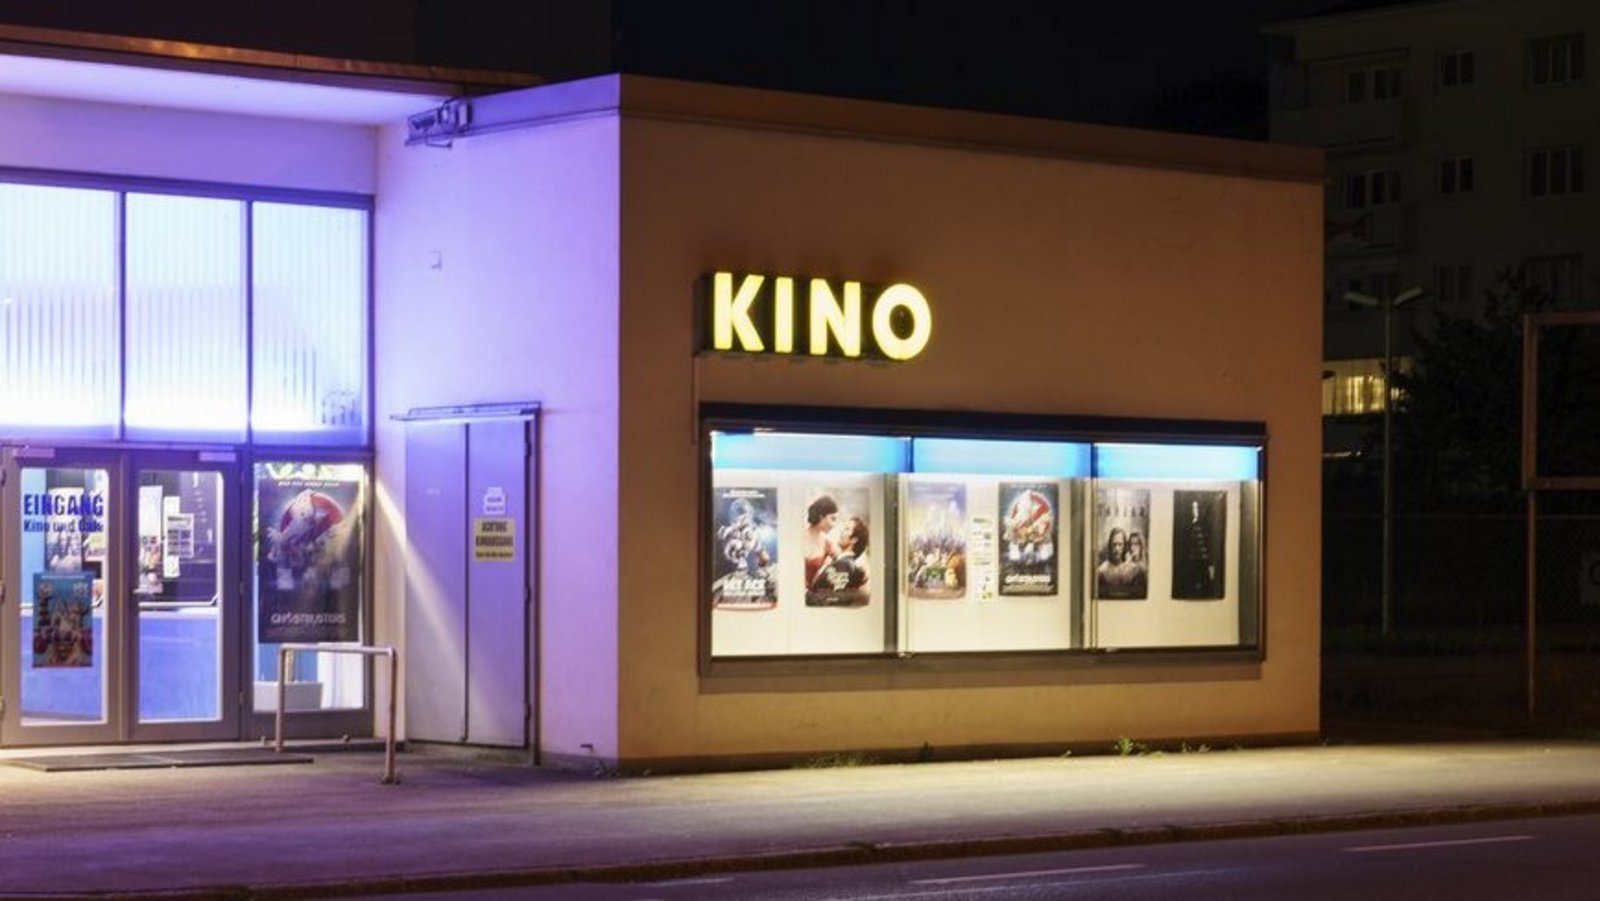 Metro Kino